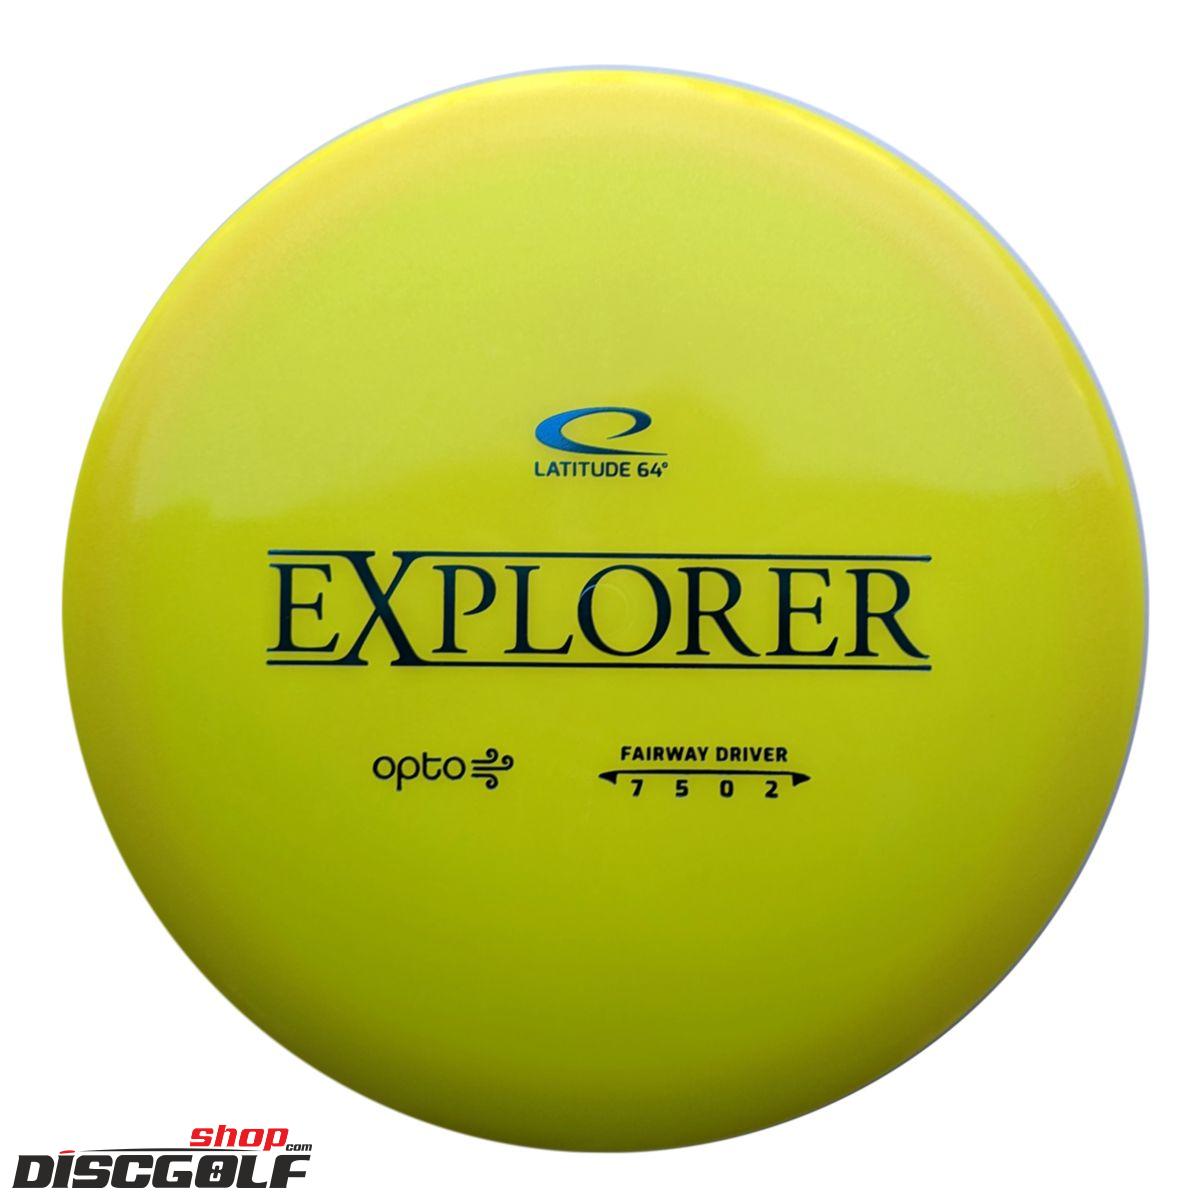 Latitude 64º Explorer OptoAir (discgolf)